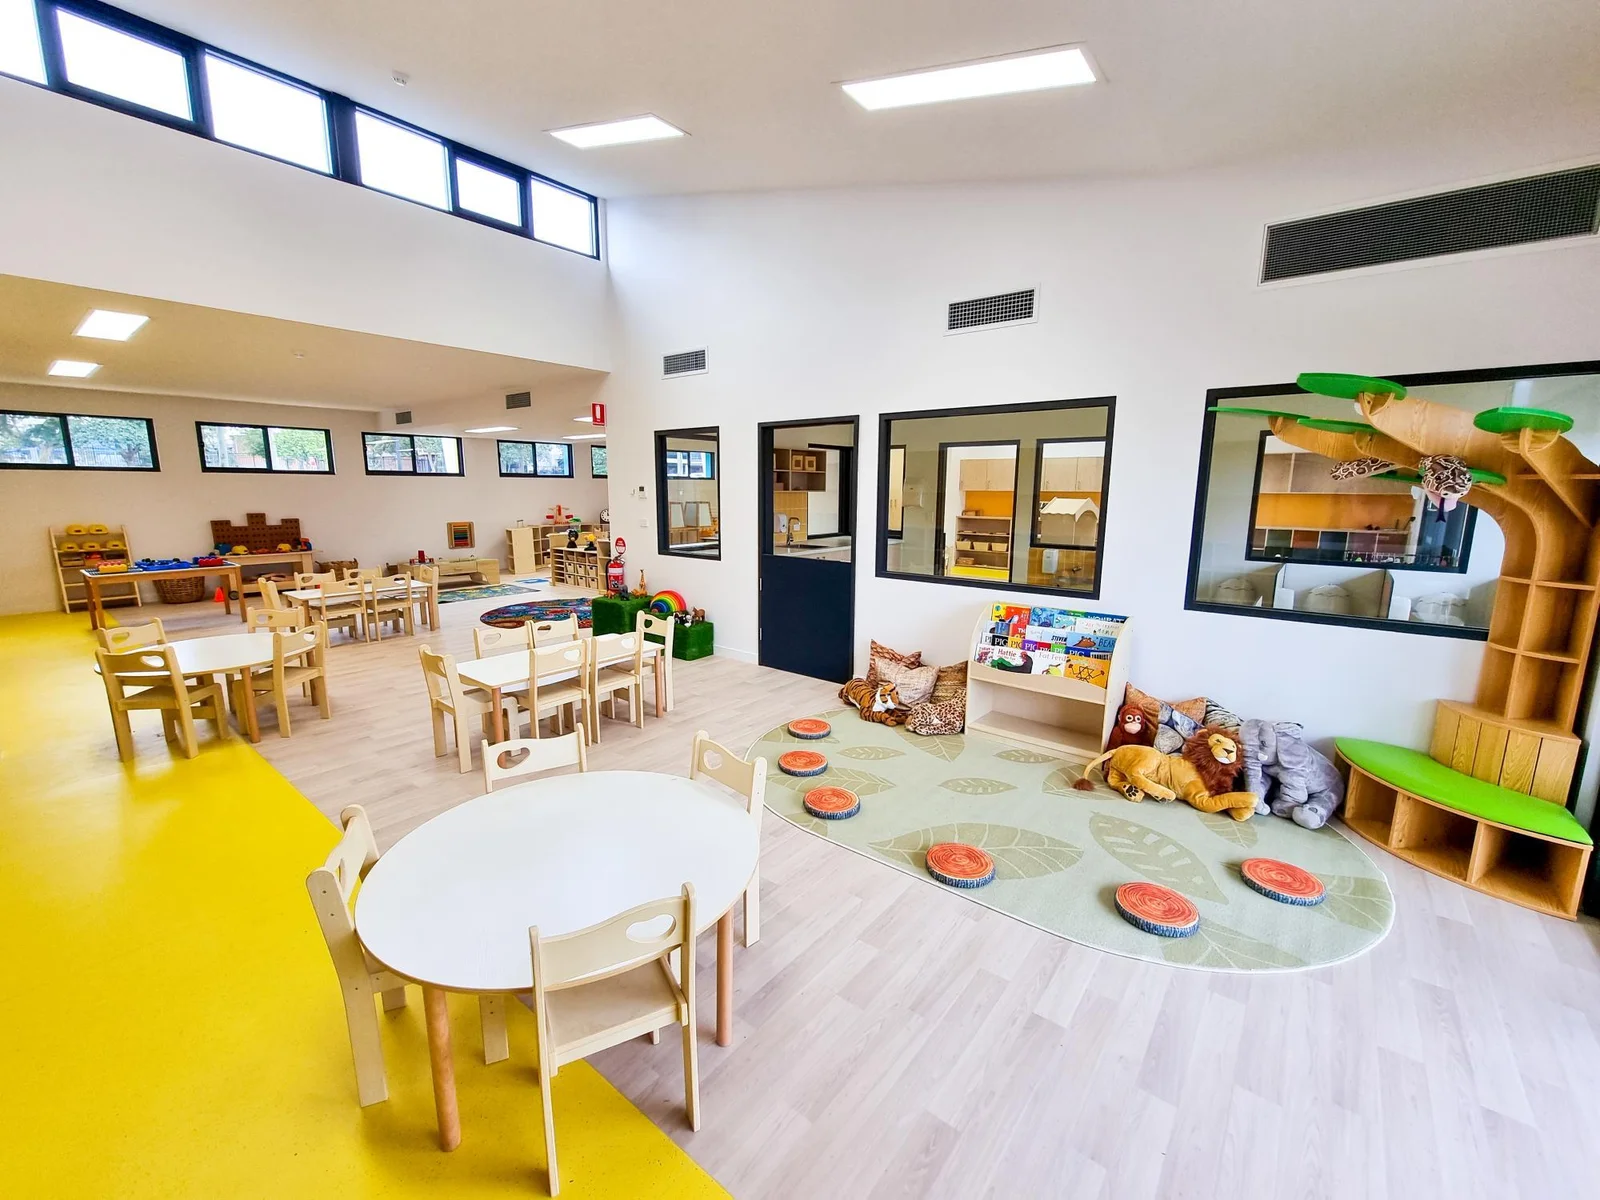 State-of-the-Art Kindergarten Classroom with Modern Amenities